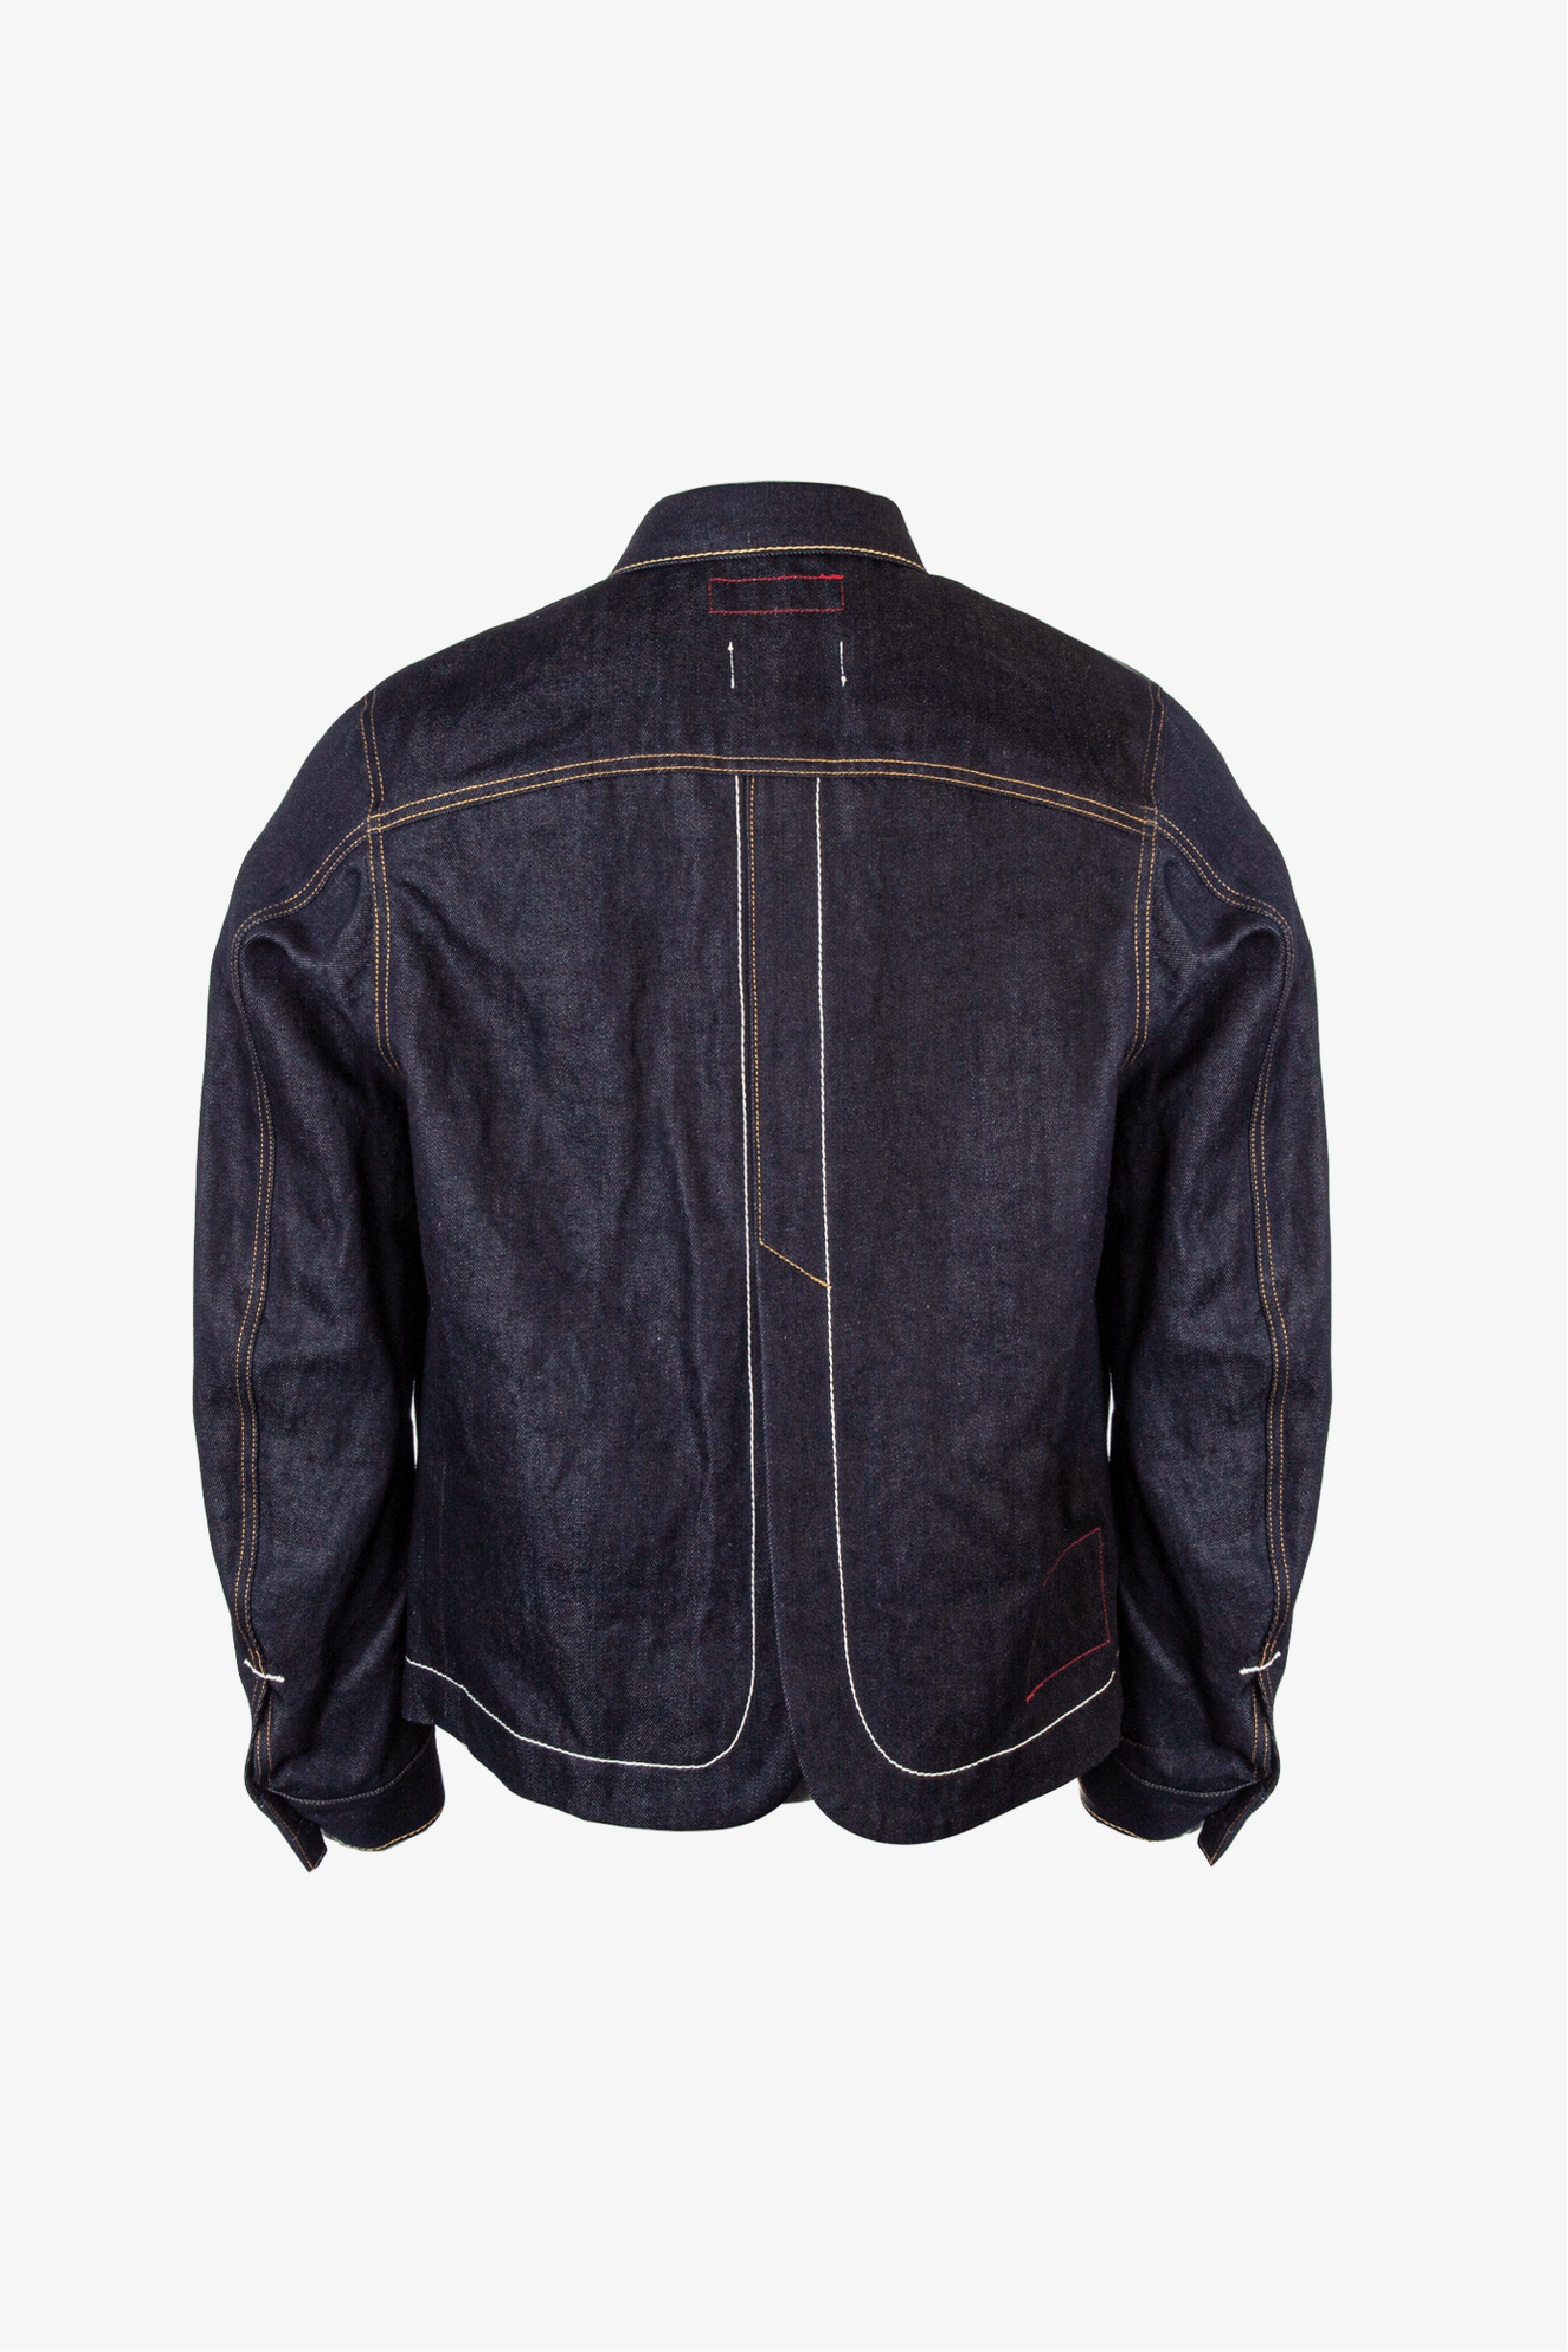 Selectshop FRAME - JUNYA WATANABE MAN Levi's Indigo Denim Jacket Outerwear Dubai